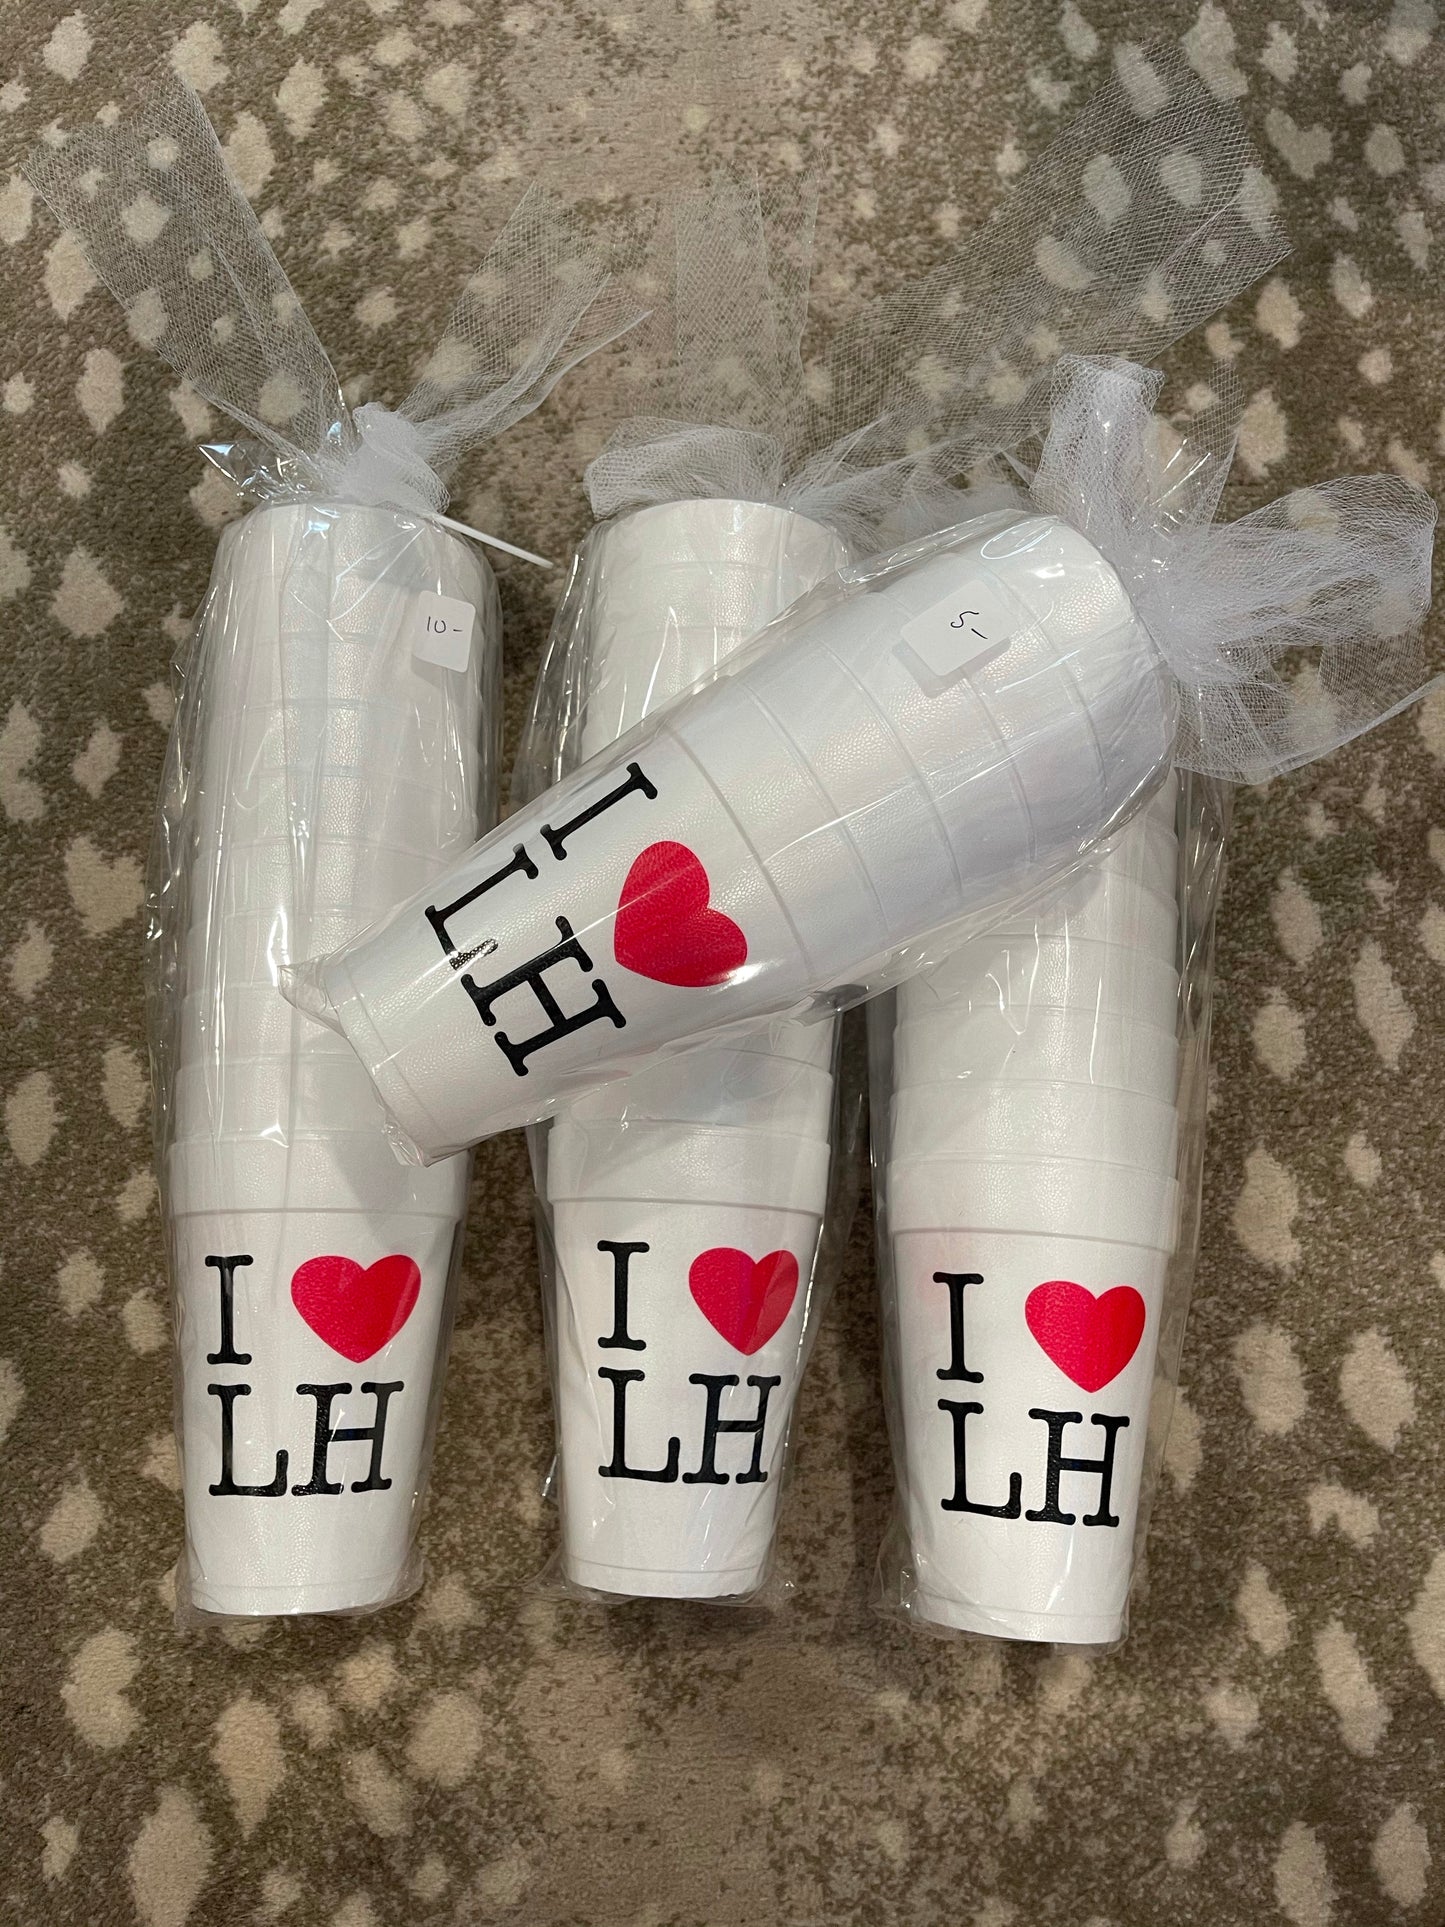 Lake Highlands Styrofoam Cups